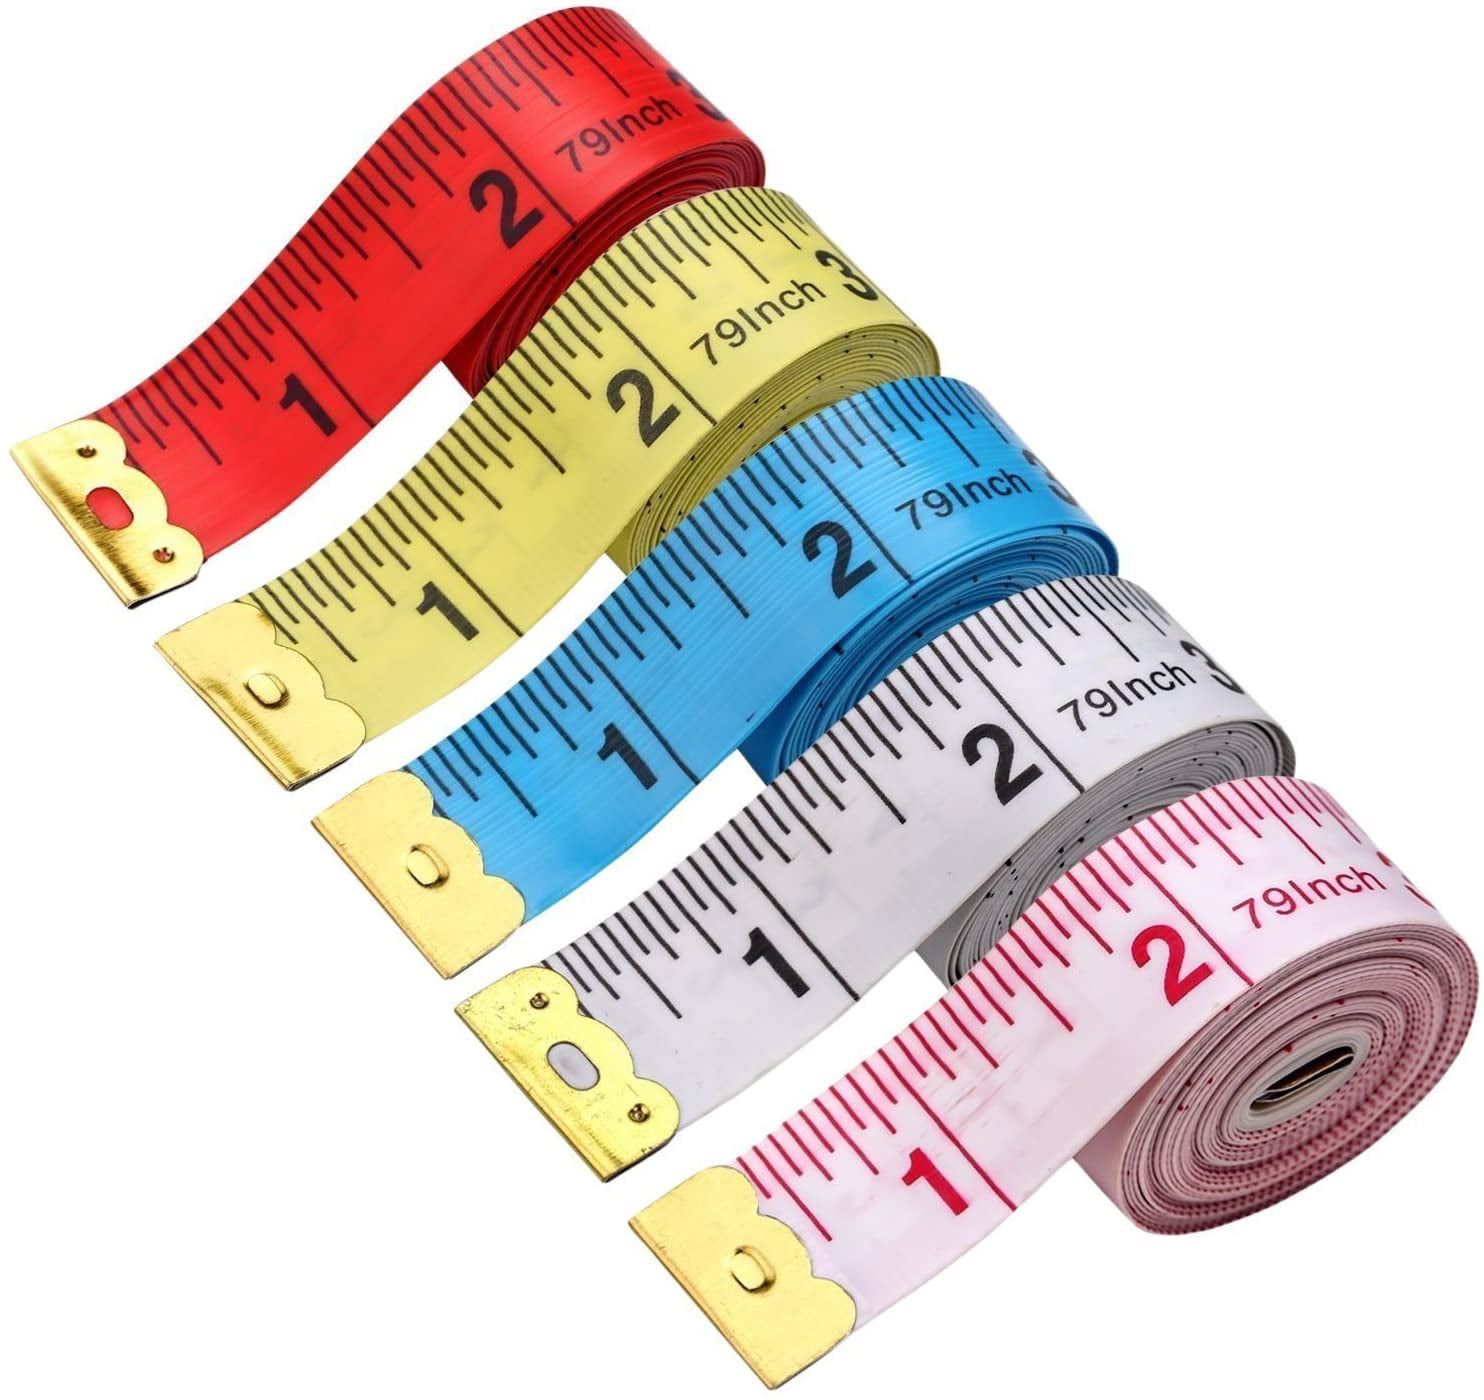 Body Measuring Tape Ruler Sewing Cloth Tailor Measure 150cm X8L3 centi Flat T0T4 